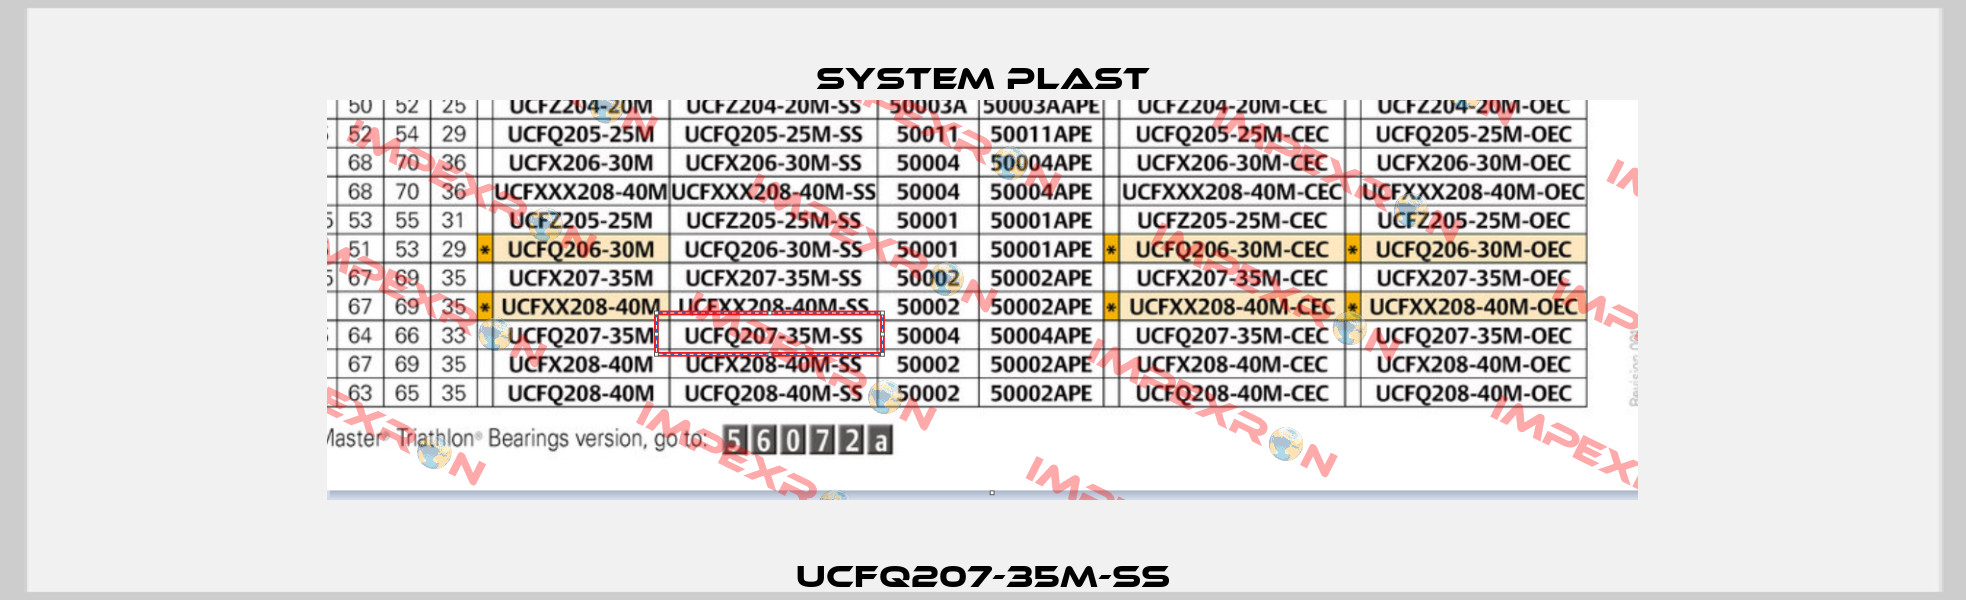 UCFQ207-35M-SS System Plast